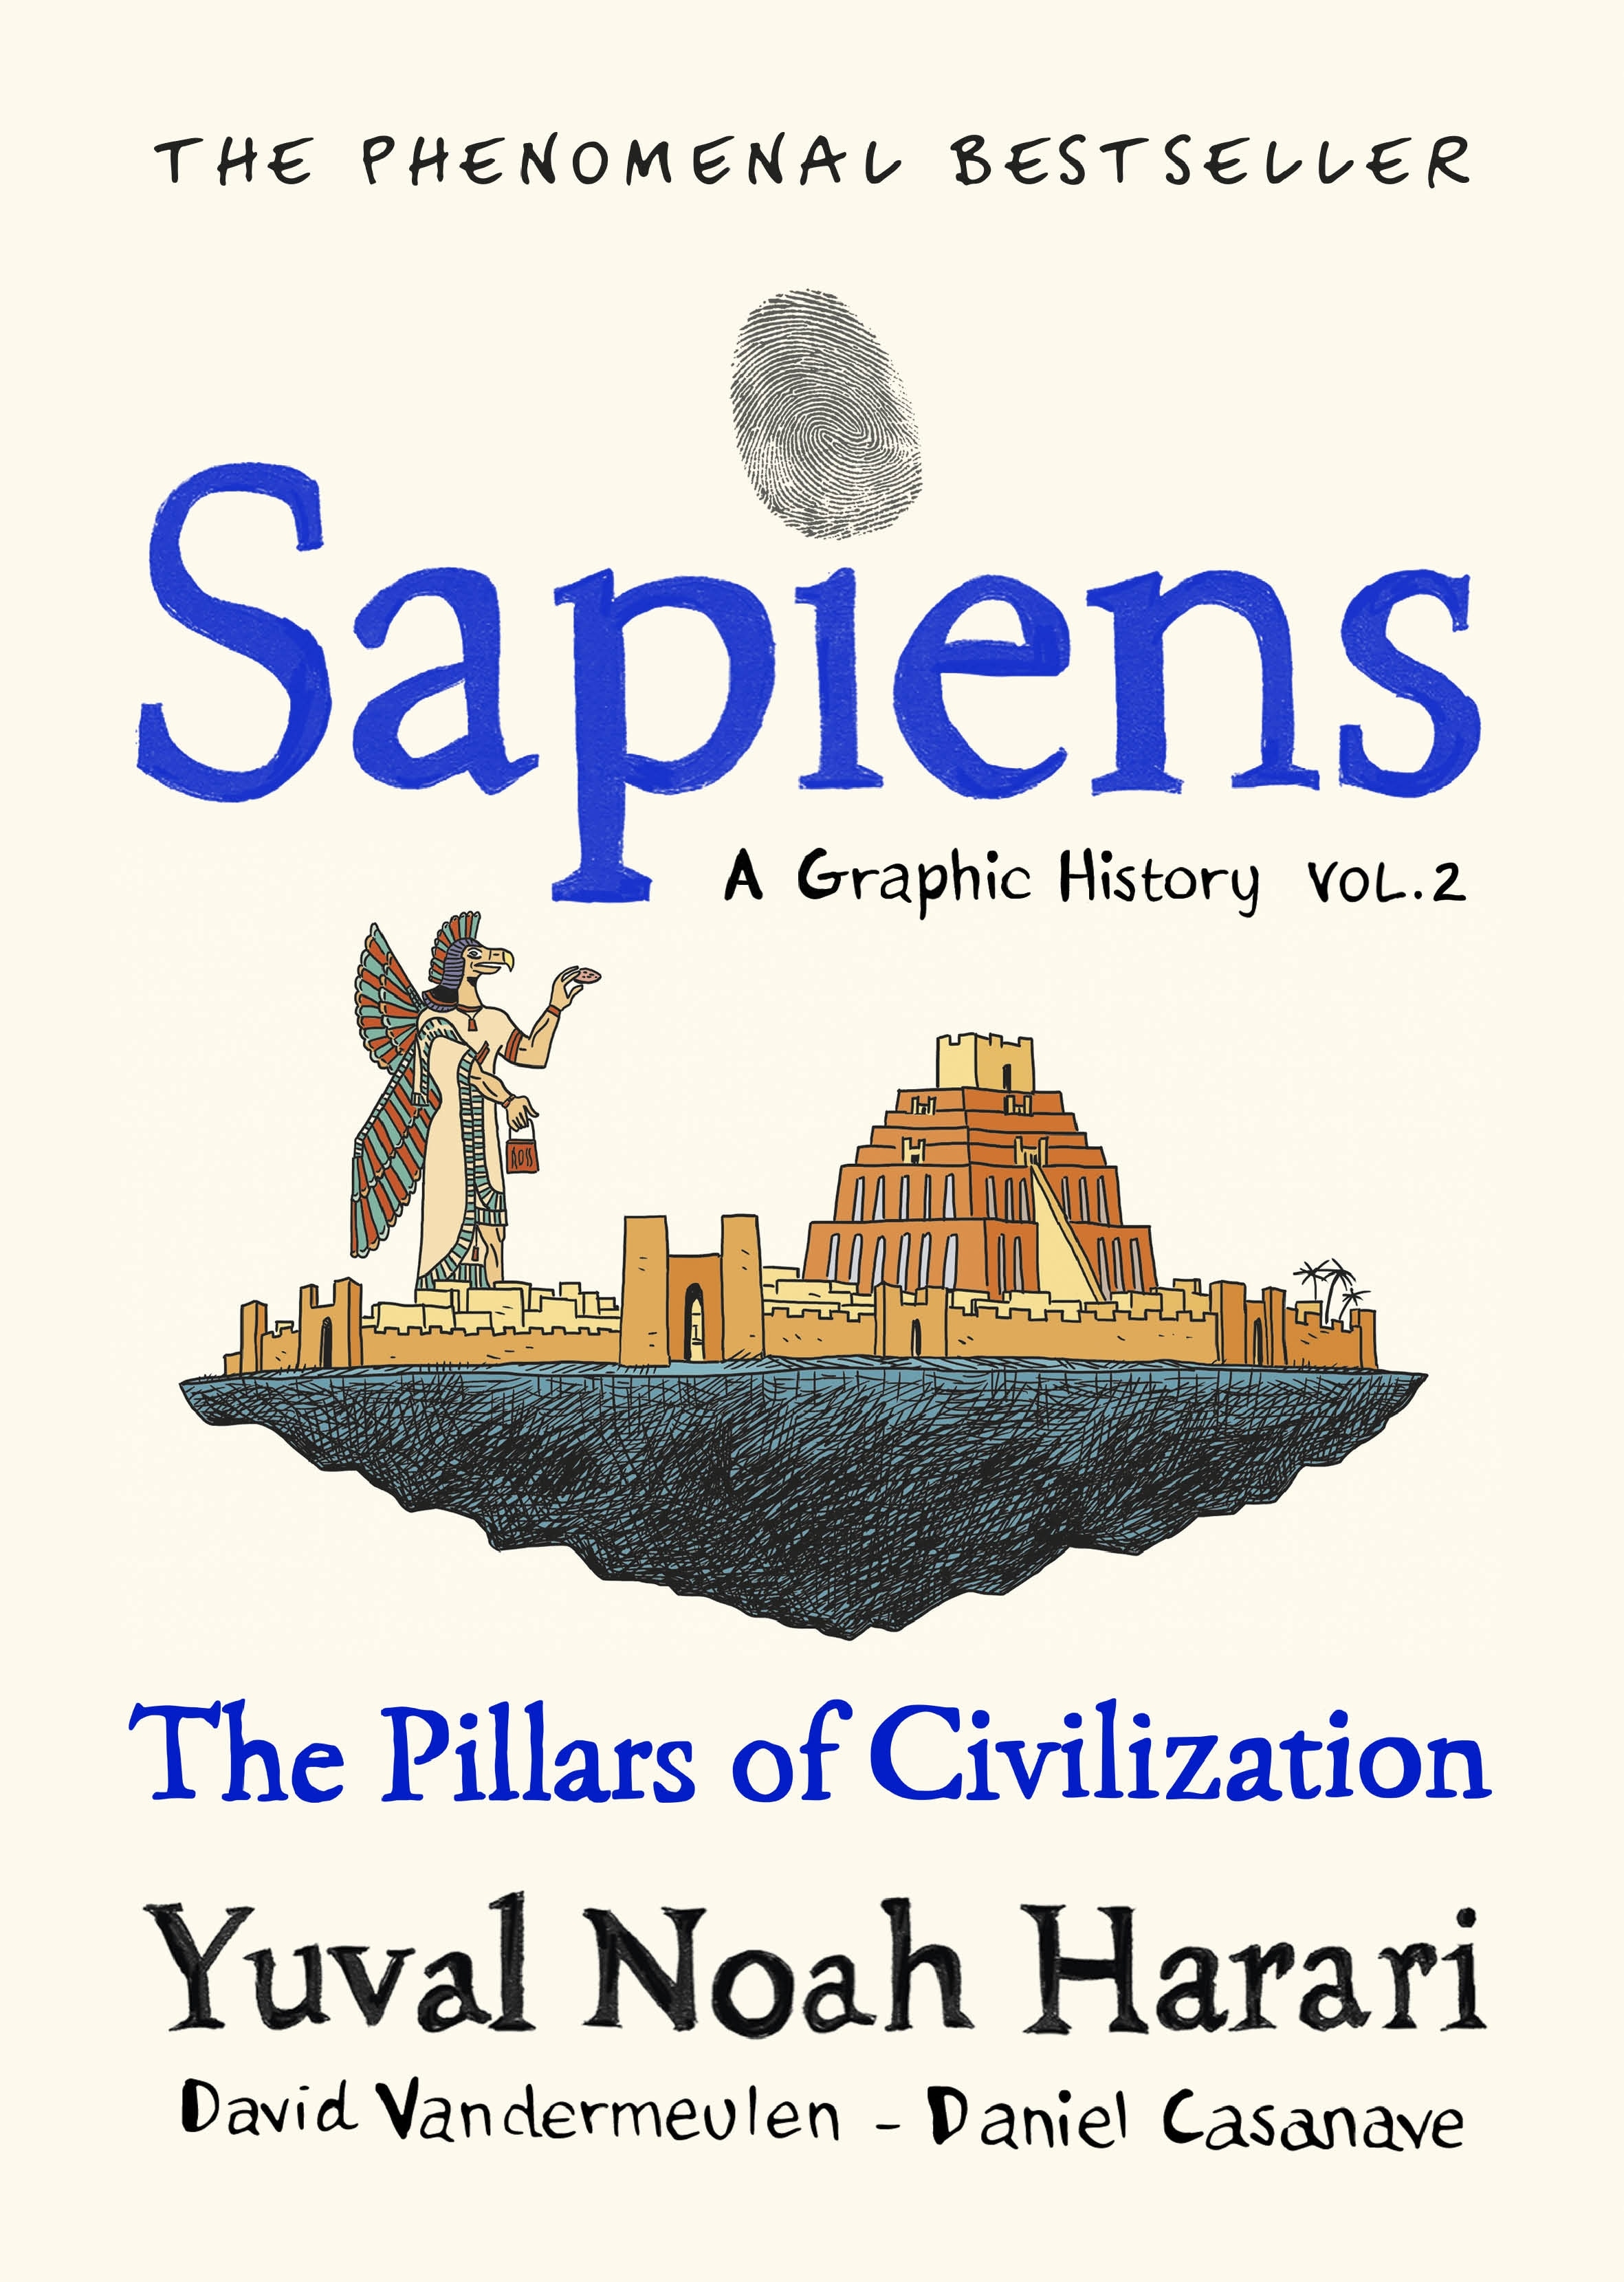 Book “Sapiens A Graphic History, Volume 2” by Yuval Noah Harari — October 28, 2021